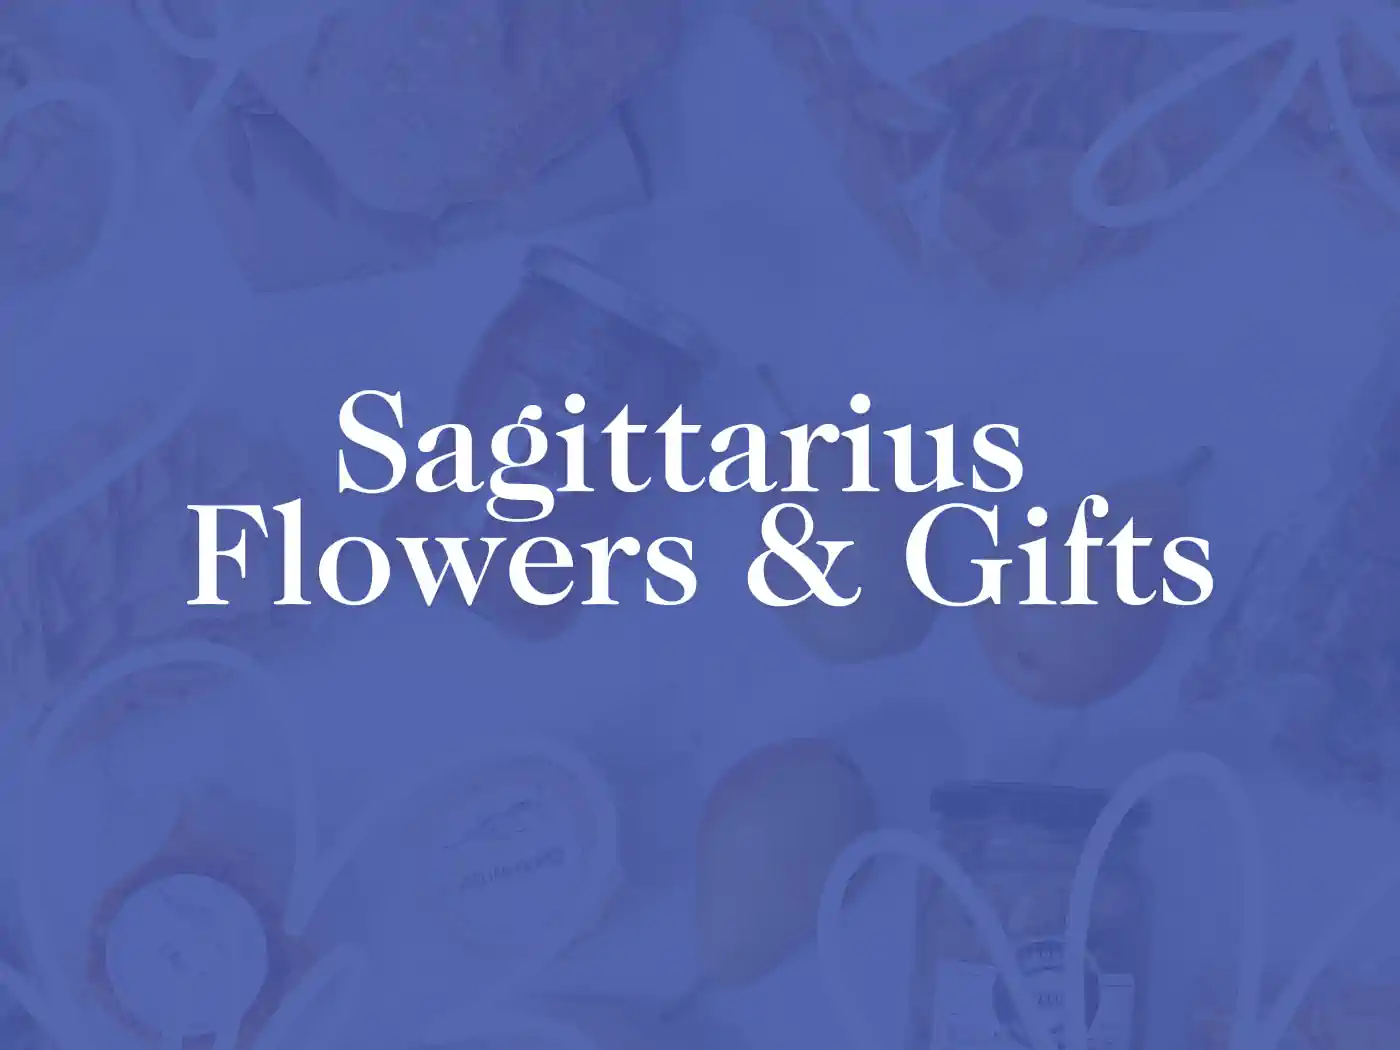 Sagittarius Flowers and Gifts" logo overlay - Fabulous Flowers and Gifts, Sagittarius Flowers and Gifts